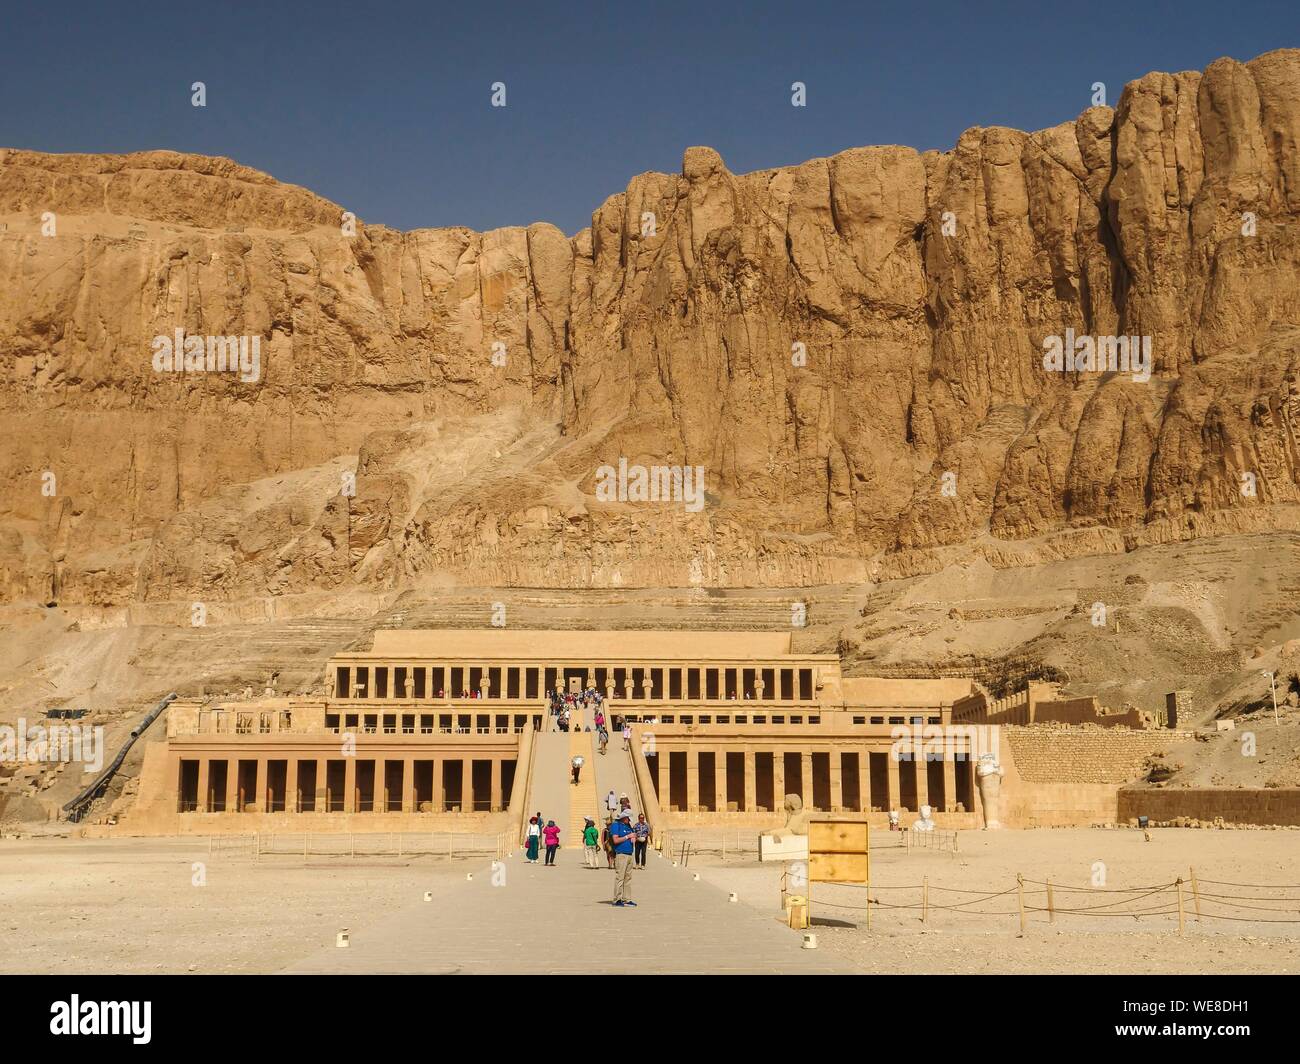 Egipto, en el Alto Egipto, El Valle del Nilo, Luxor, necrópolis tebana, Sitio del Patrimonio Mundial de la UNESCO, al oeste de Tebas, Deir el Bahari, Hatshepsut Foto de stock